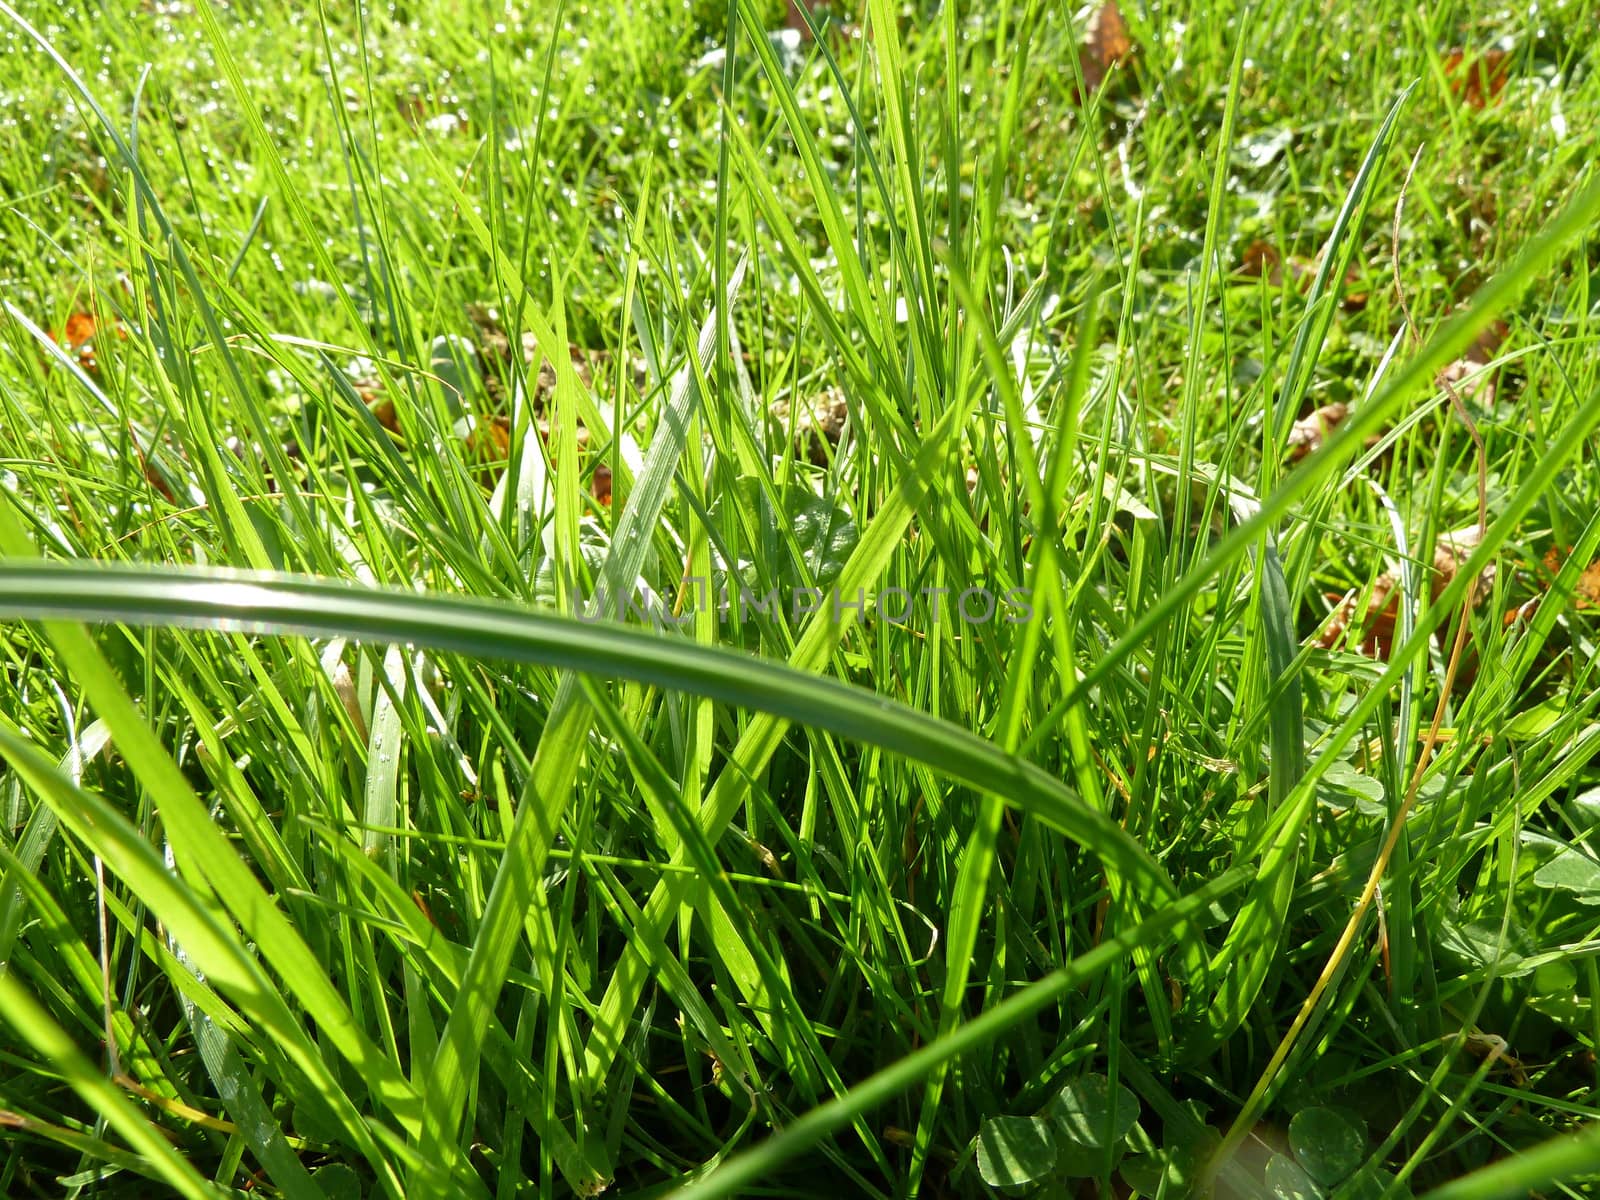 Grass blades by gazmoi